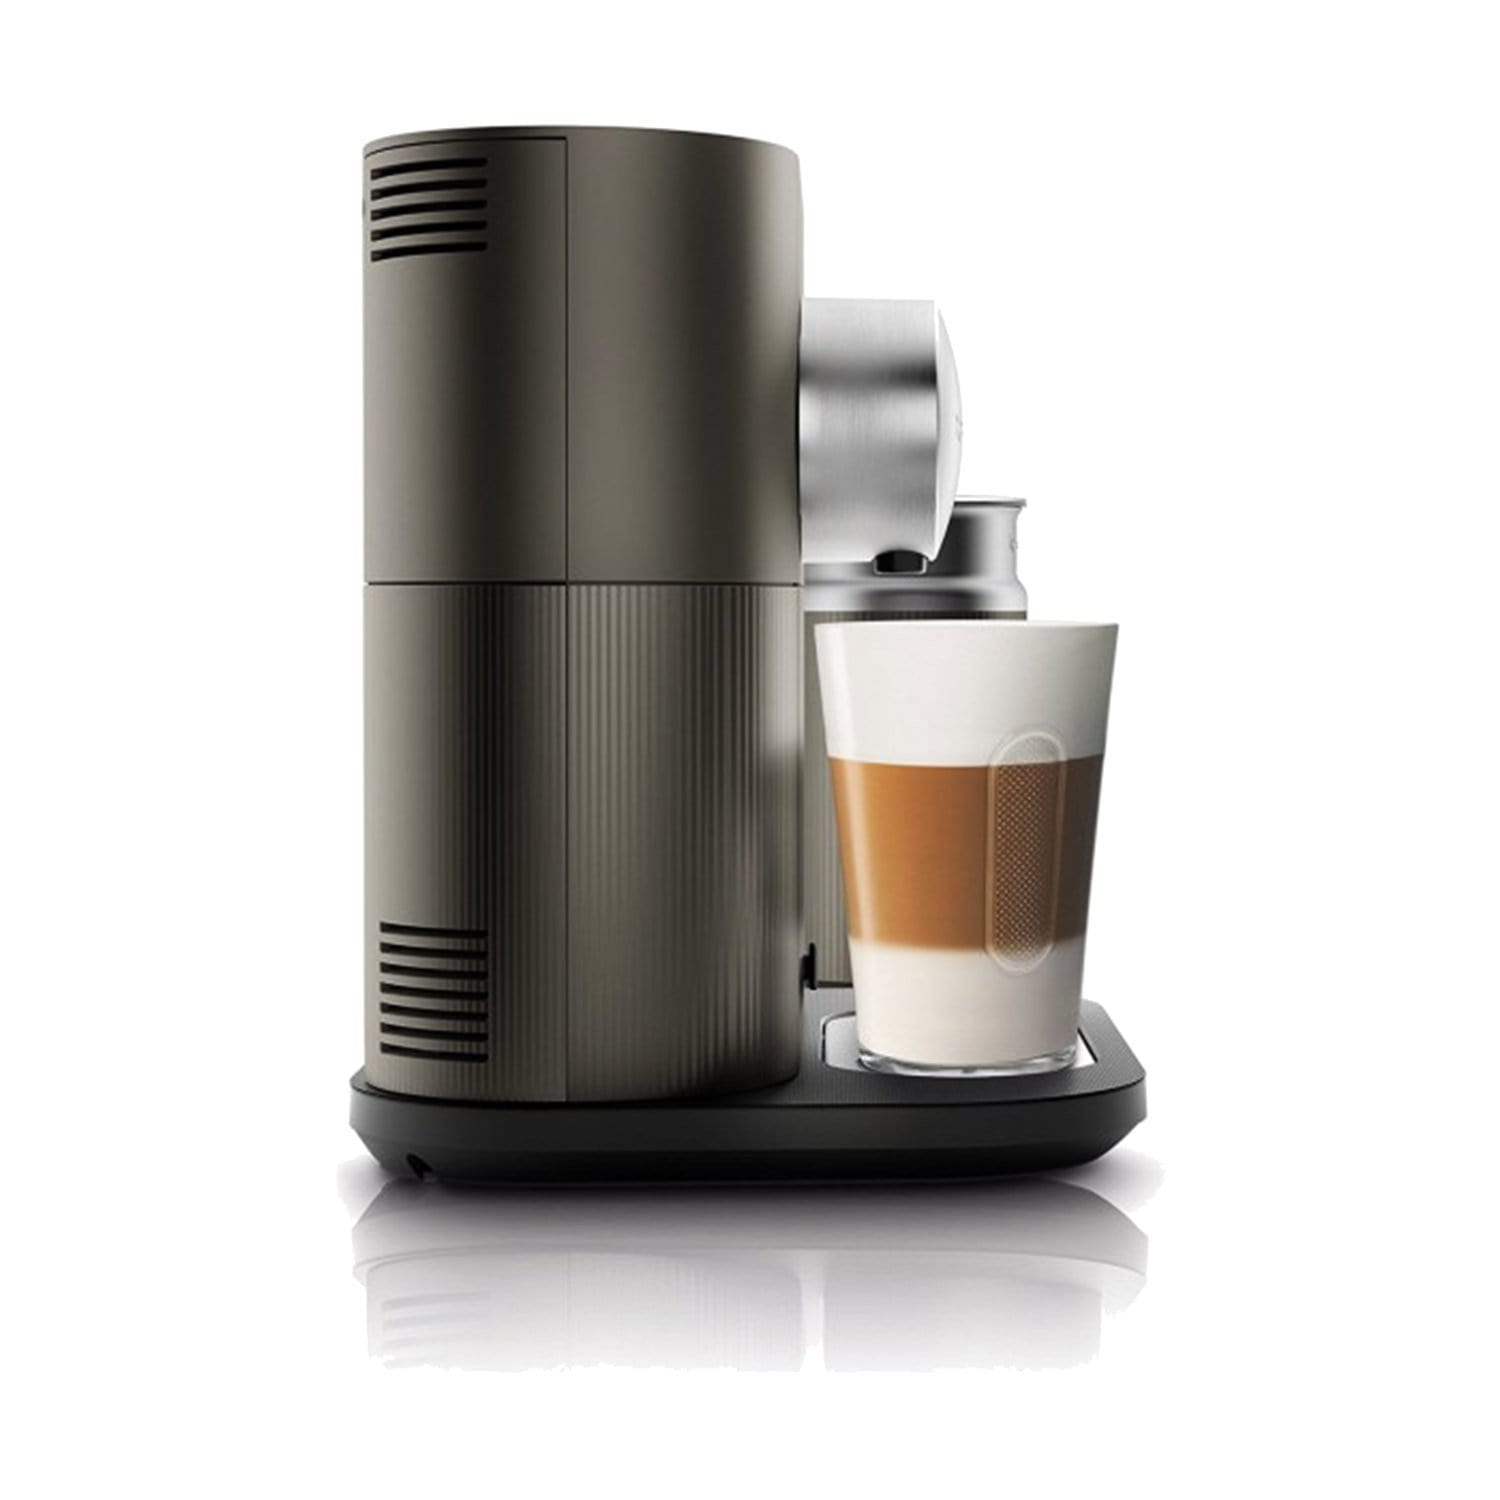 Nespresso ماكينة قهوة اكسبرت بالحليب الأسود - C85-ME-BK-NE - جاشنمال هوم